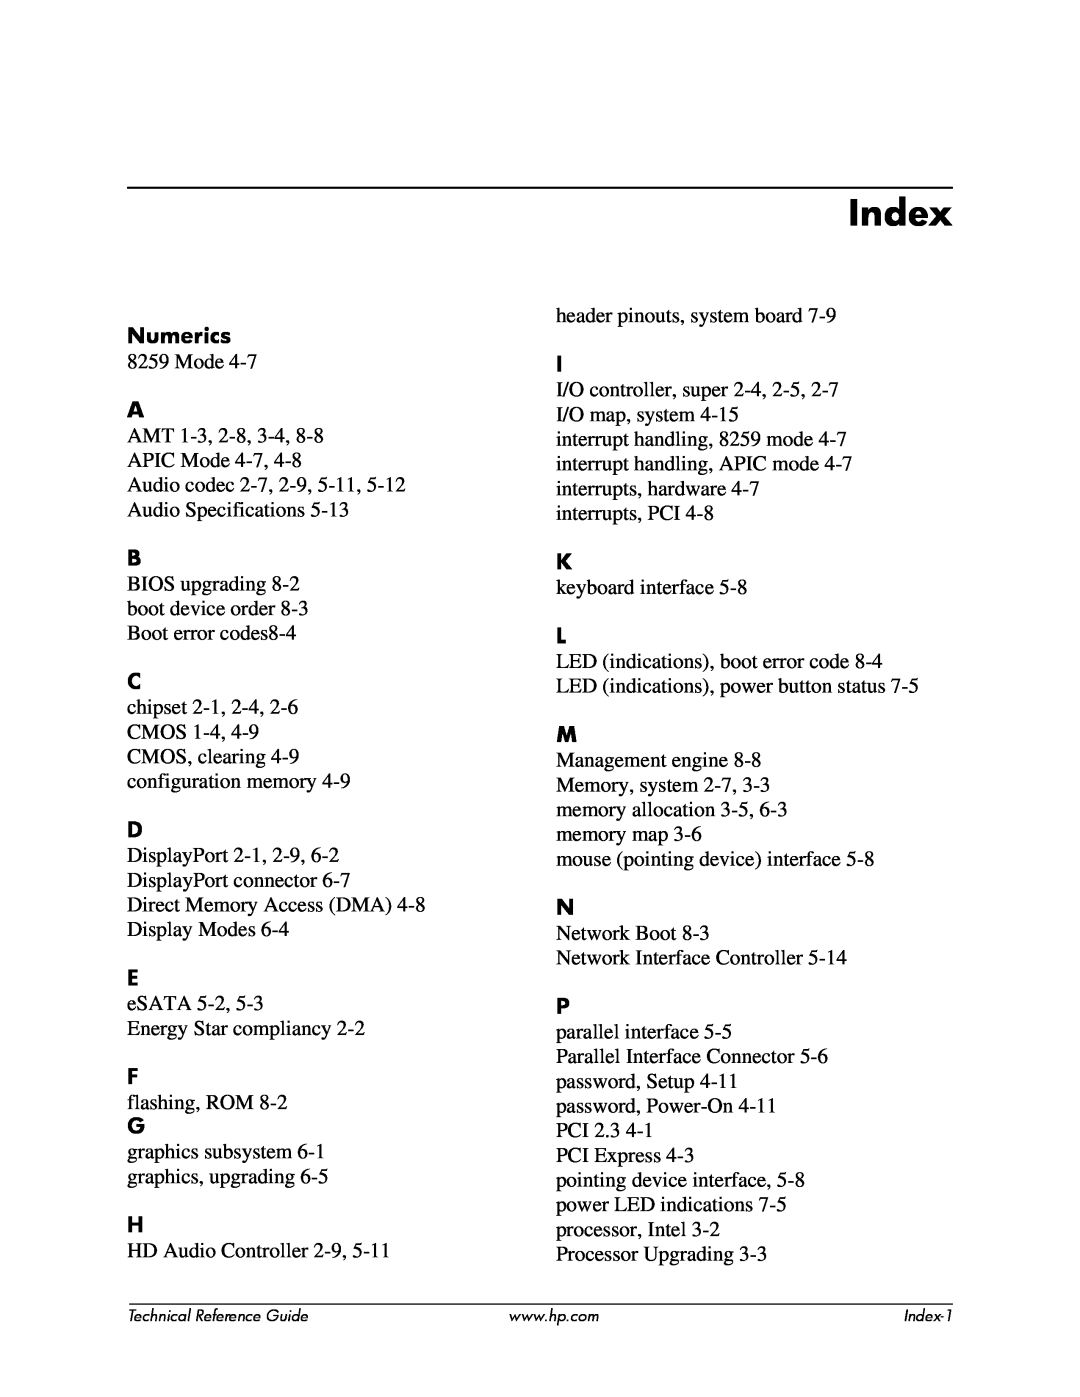 HP 8000 tower manual Index, Numerics 